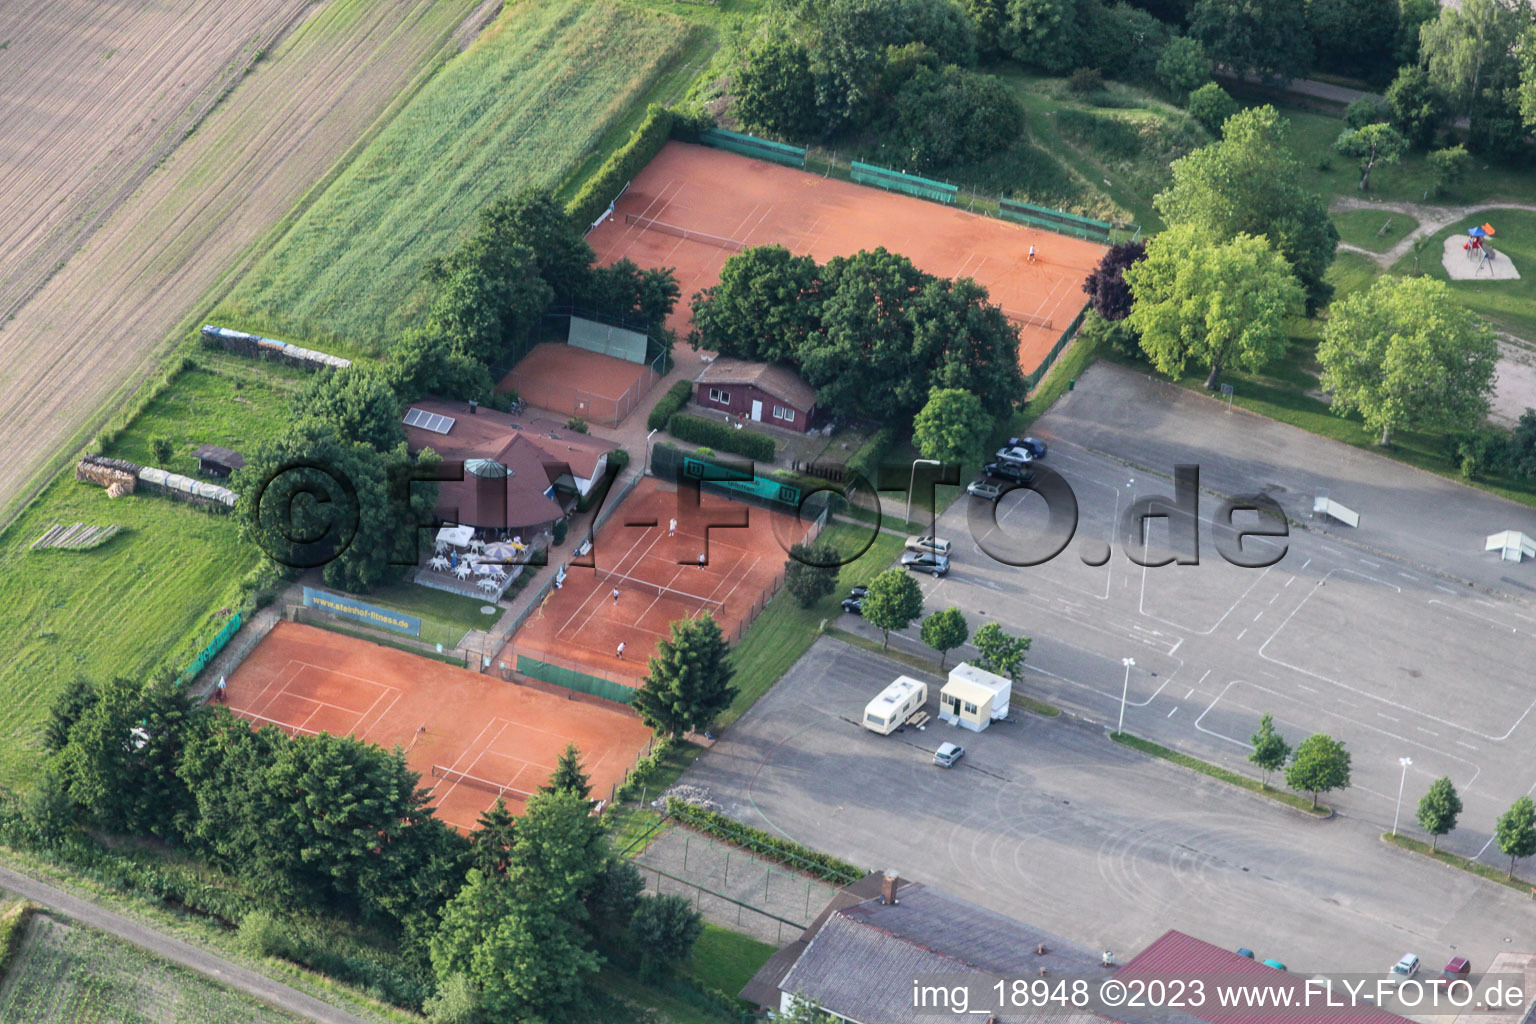 Tennis in the district Urloffen in Appenweier in the state Baden-Wuerttemberg, Germany